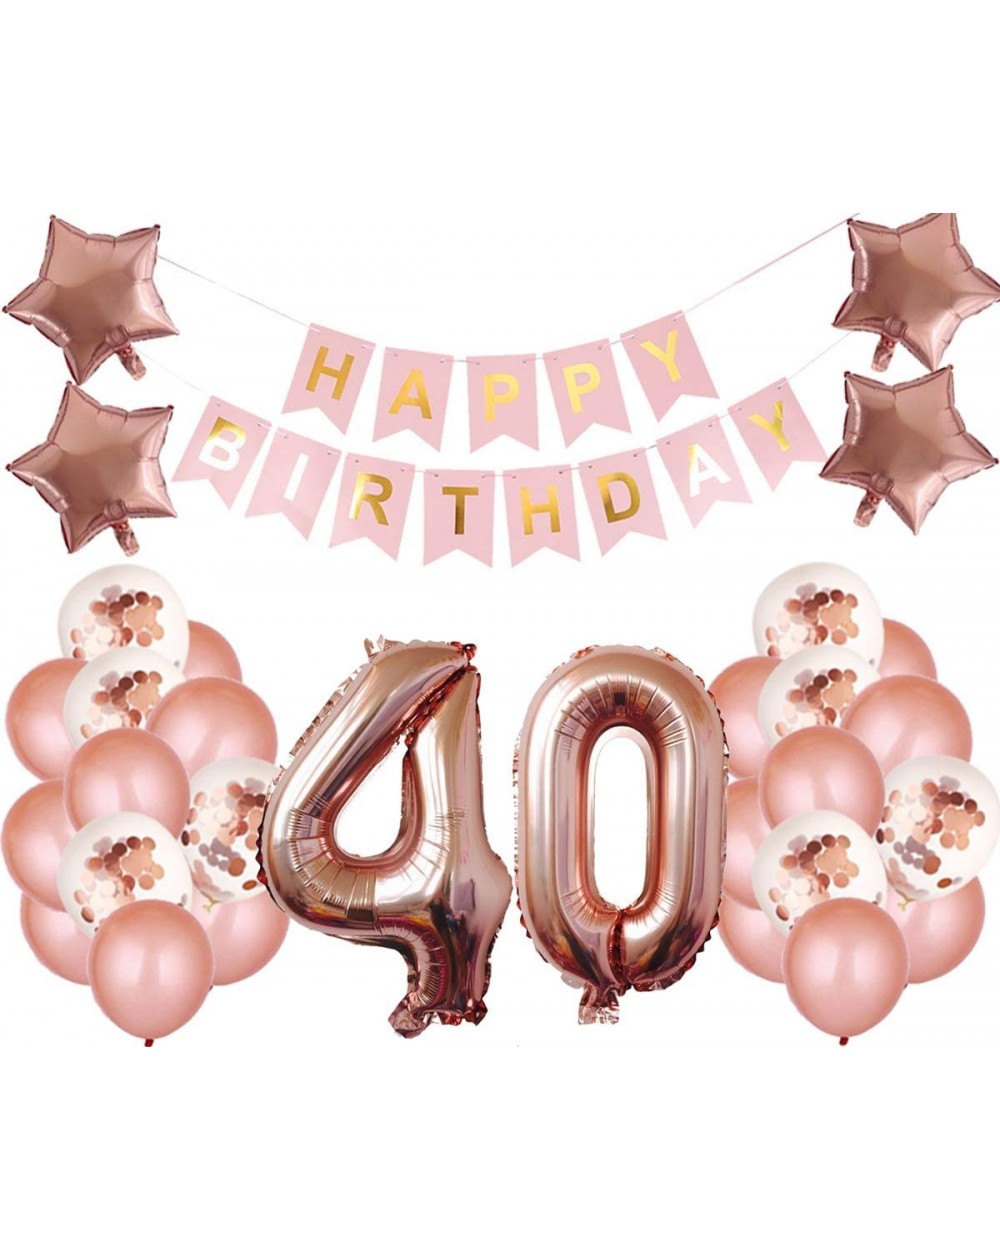 Balloons 40th Birthday Party Decorations Kit Happy Birthday Banner with Number 40 Birthday Balloons for Birthday Party Suppli...